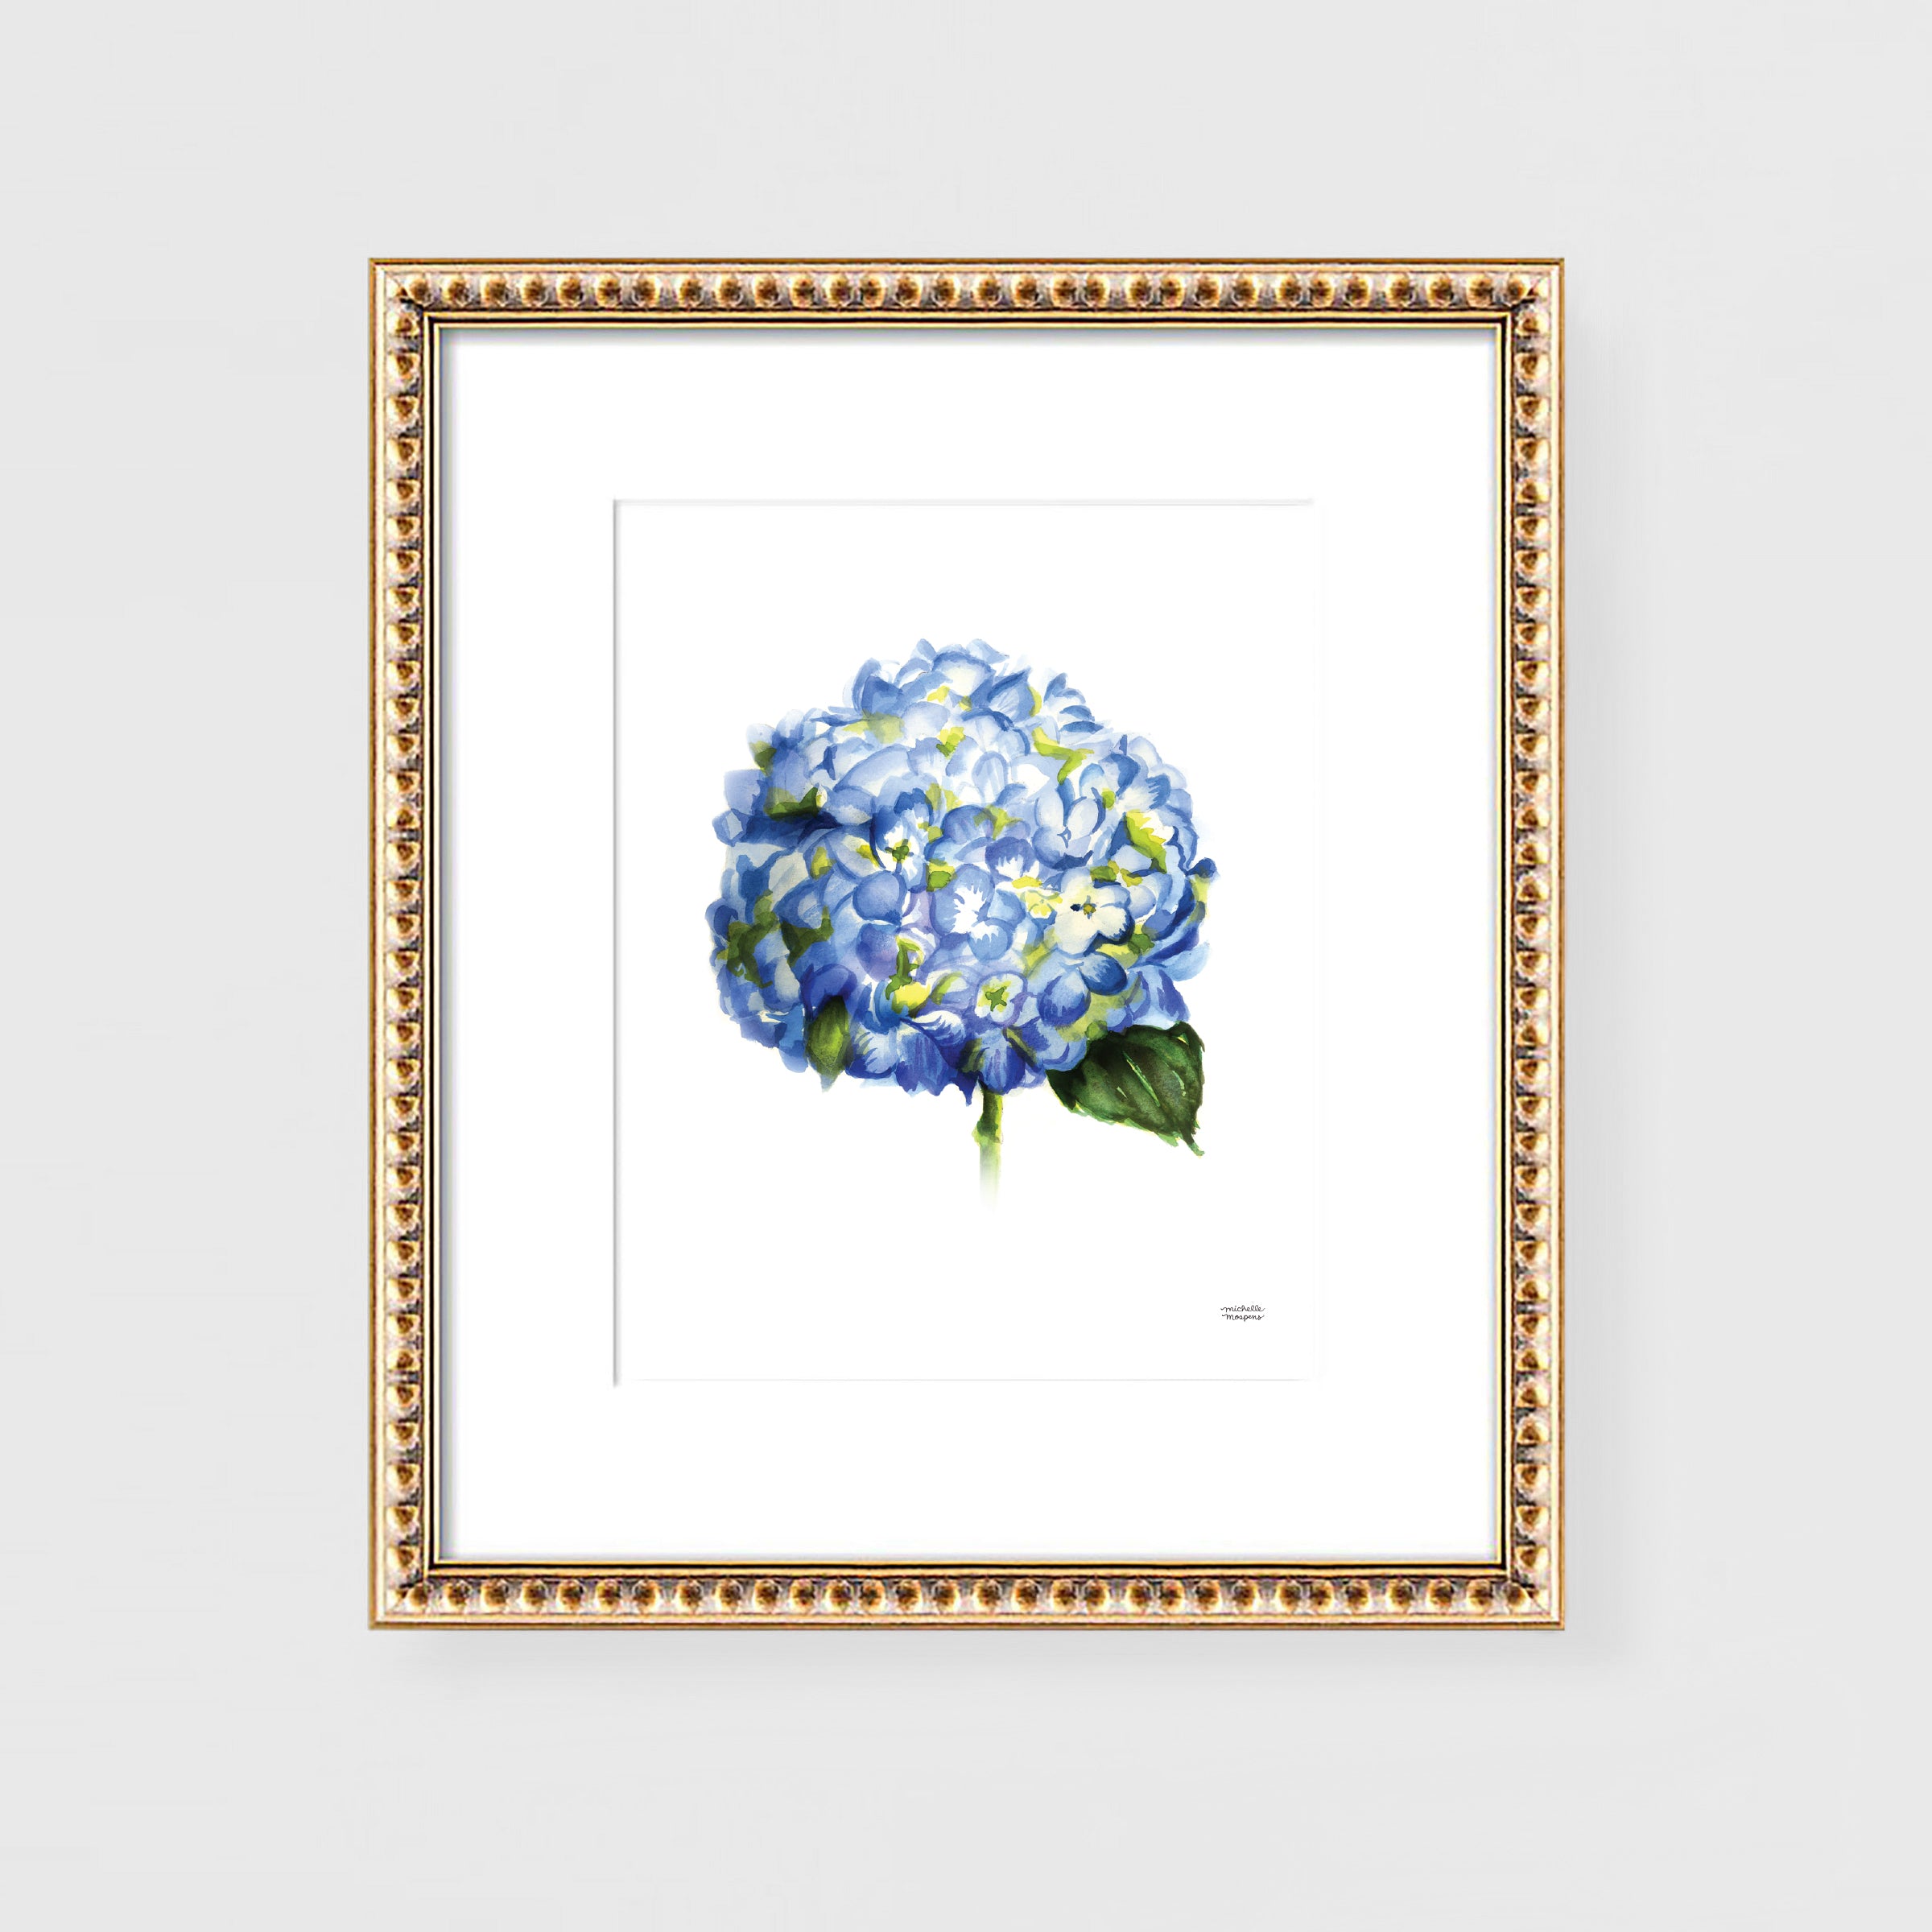 Blue Hydrangea Floral Watercolor Wall Art Print by artist Michelle Mospens.